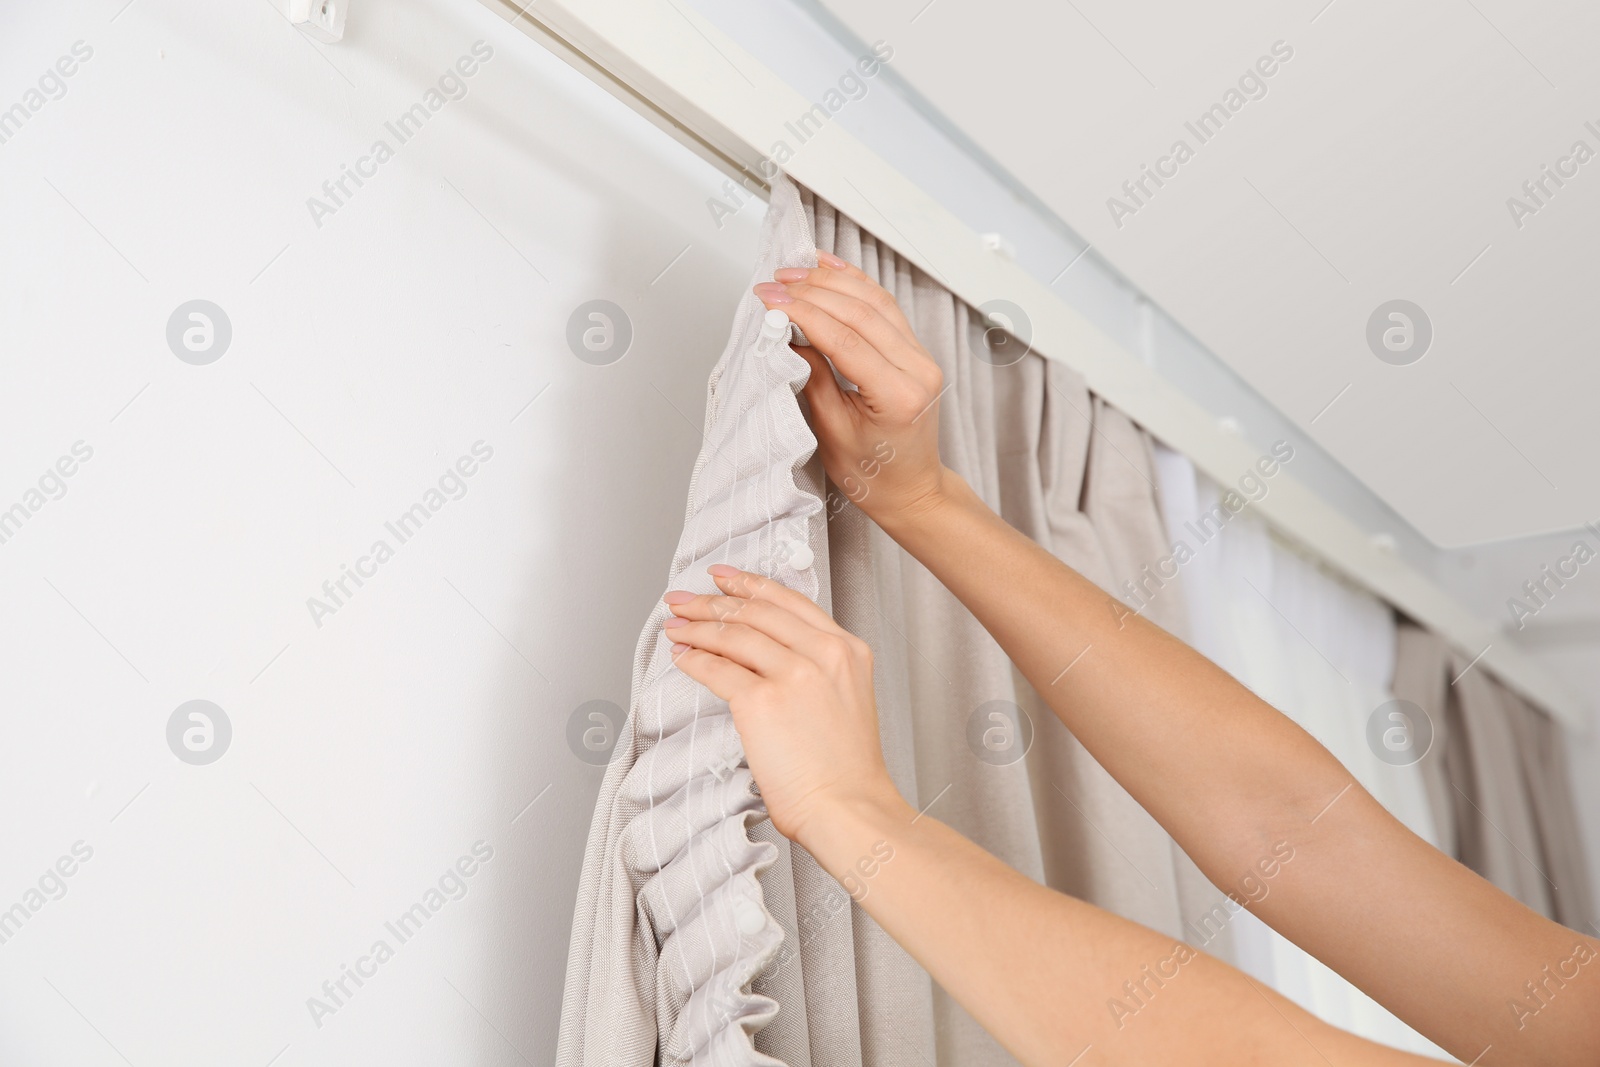 Photo of Woman hanging window curtain indoors, closeup. Interior decor element